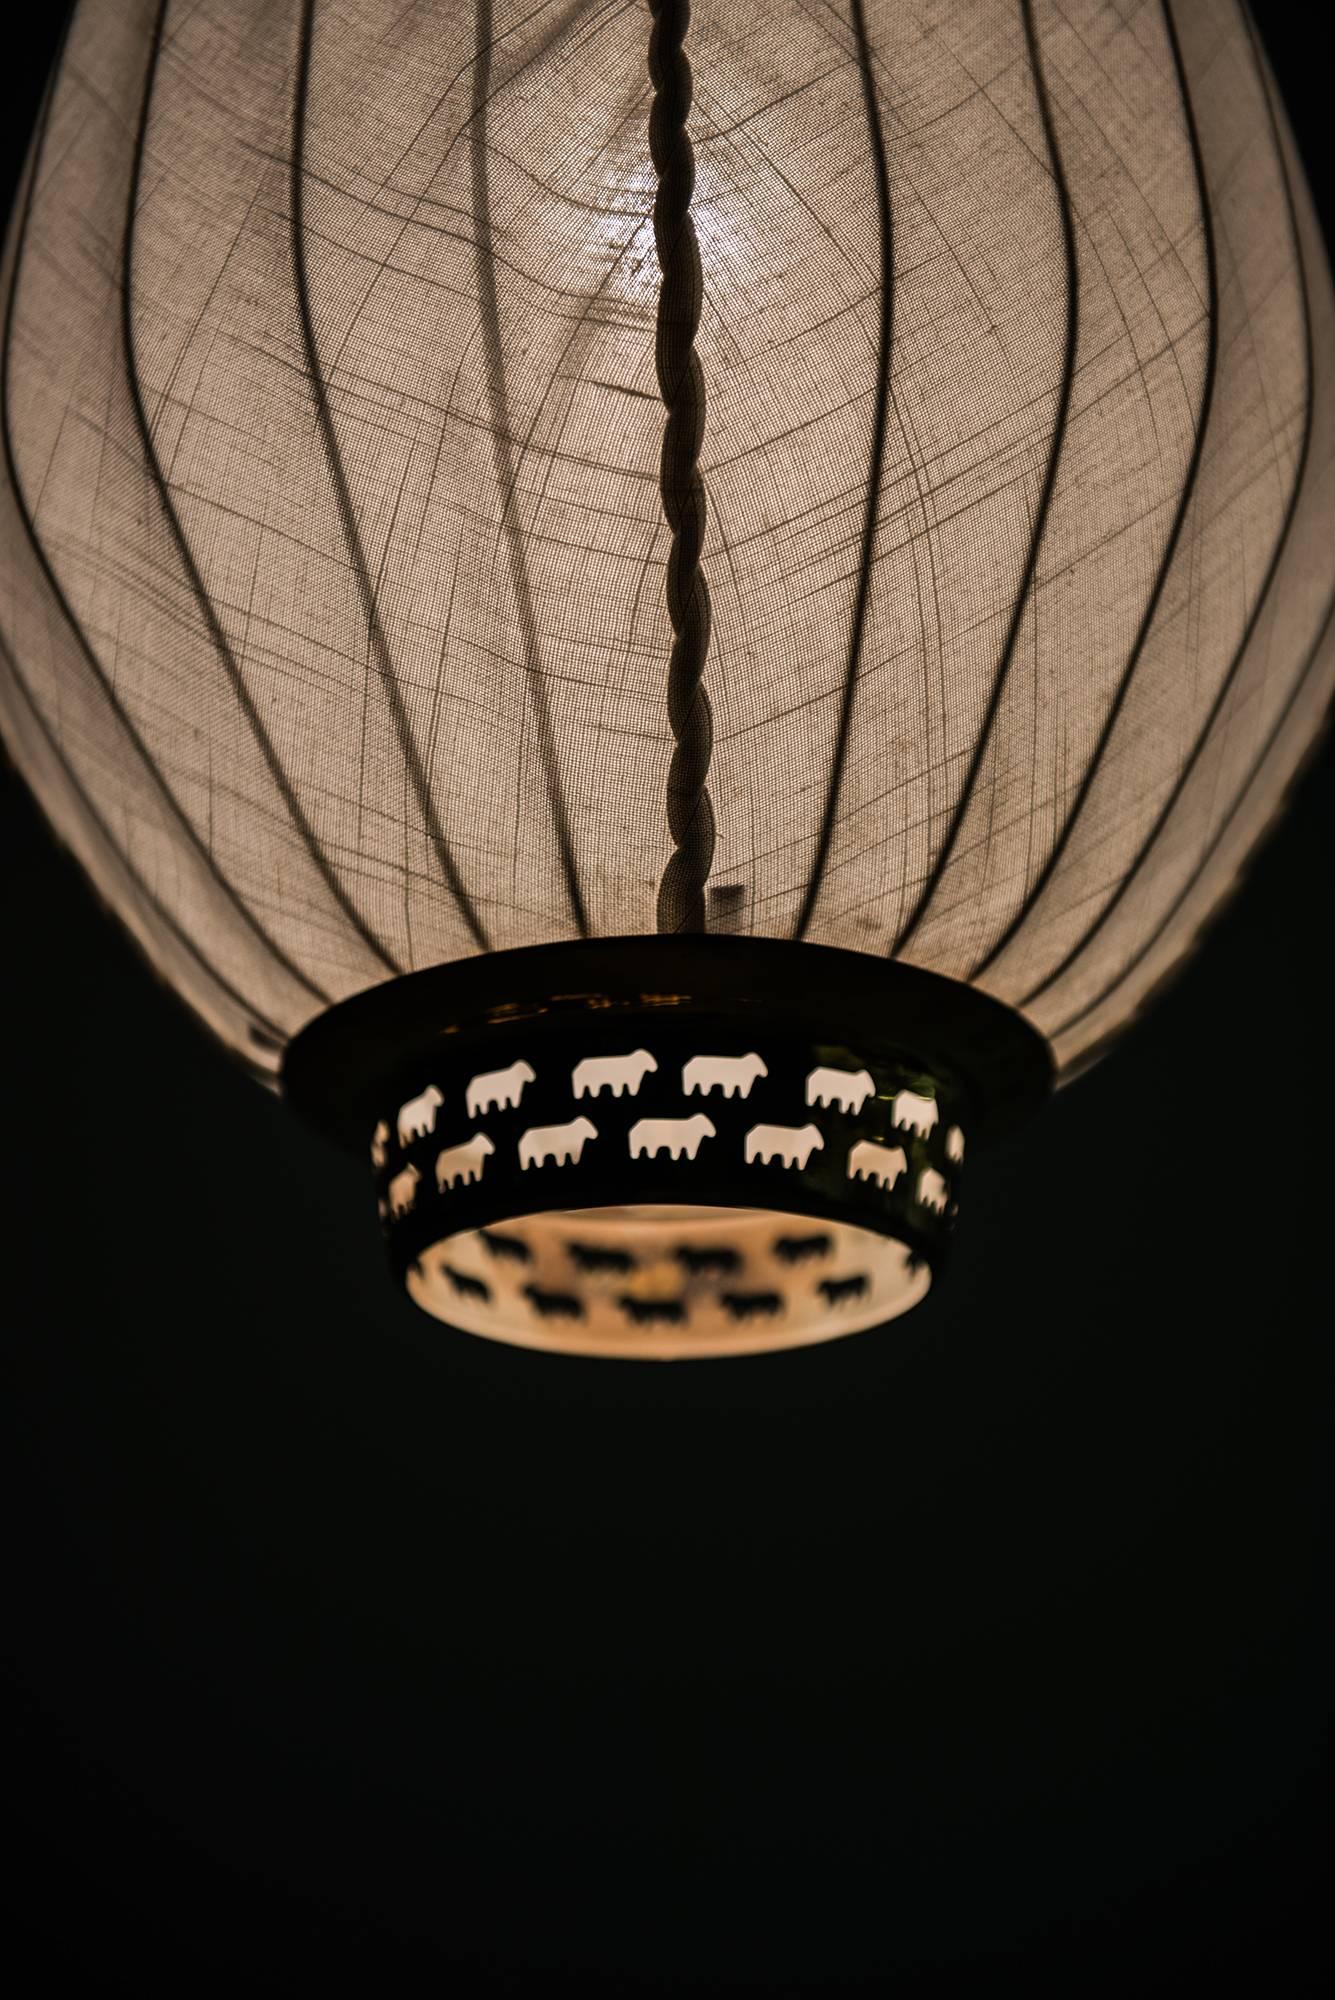 Hans Bergström Ceiling Lamp by Ateljé Lyktan in Åhus, Sweden 2